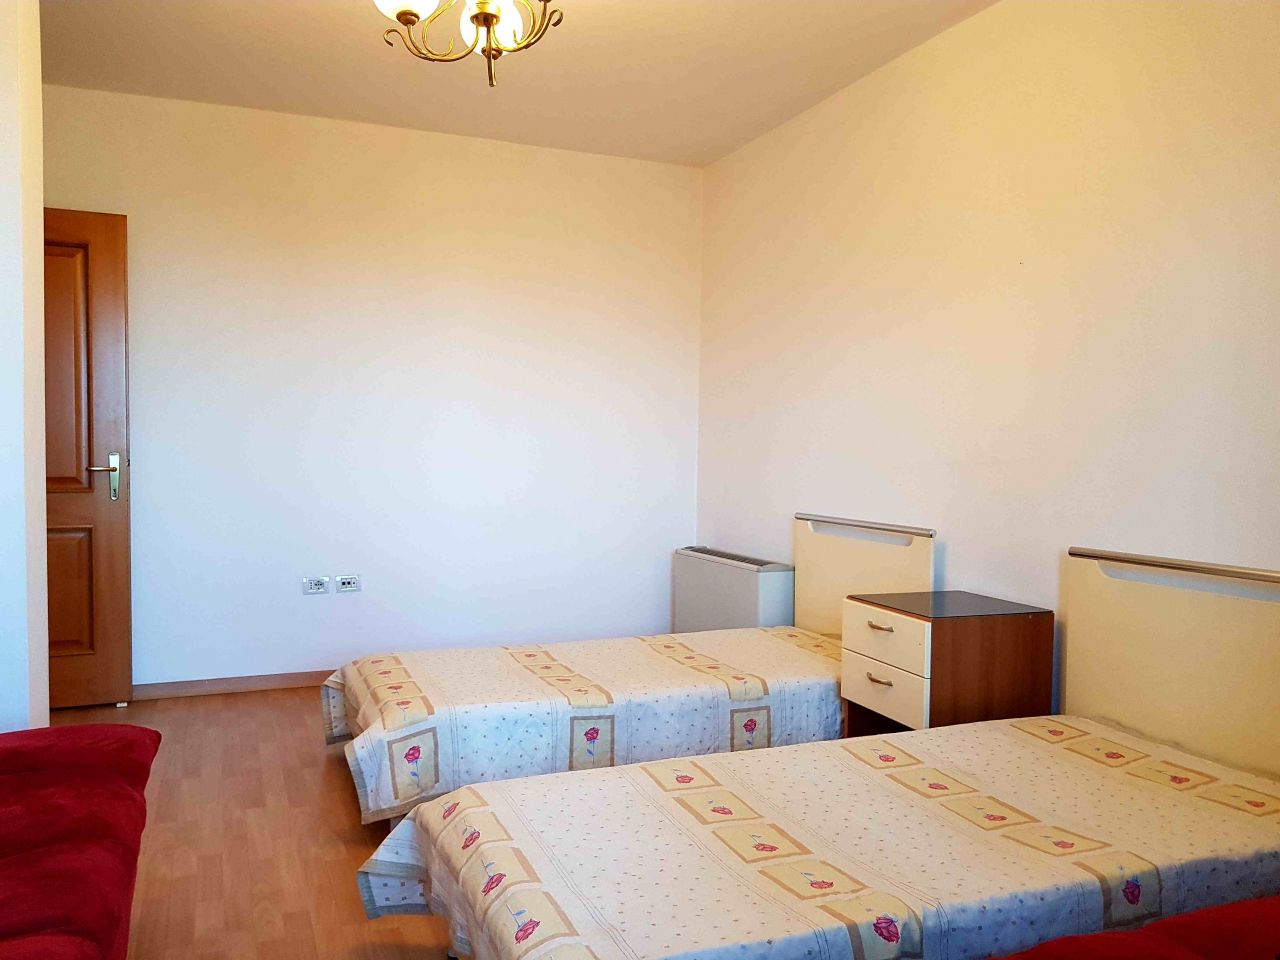 Apartment for Rent in Tirana at Blloku Area